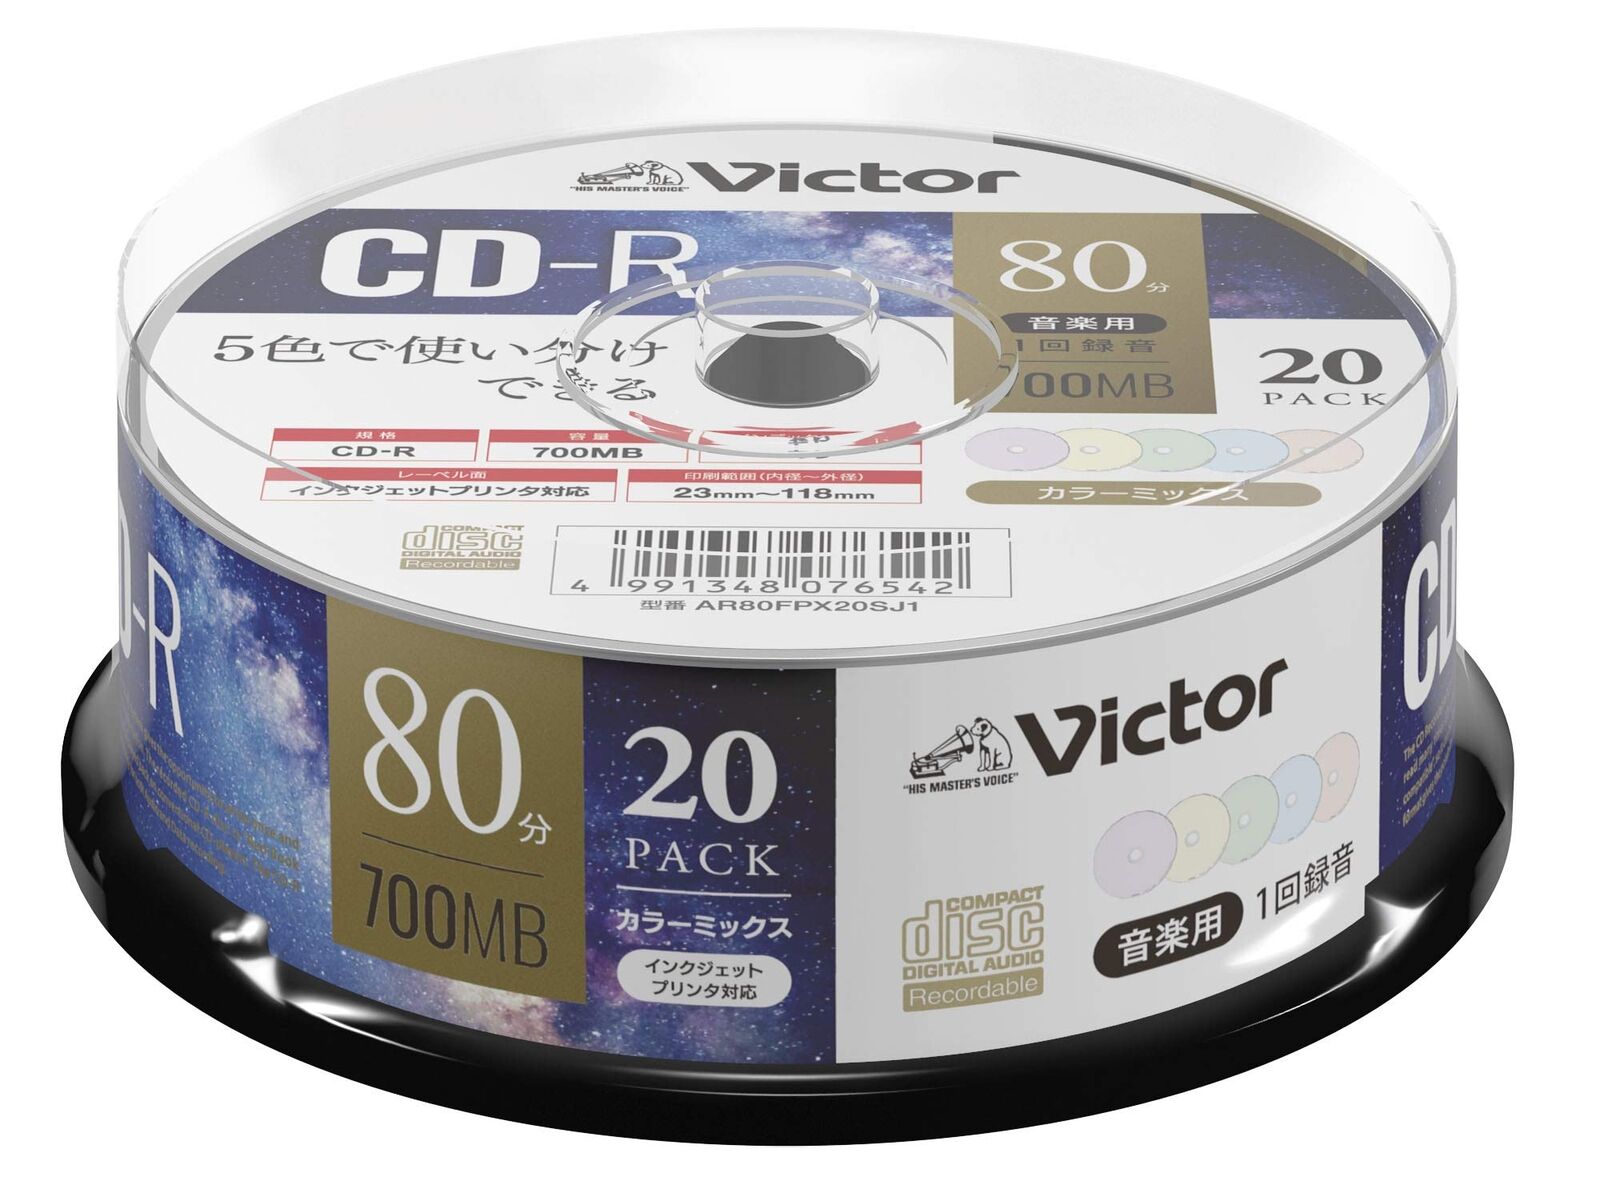 Victor Music CD R 80min 20 Discs Color Mix Printable AR80FPX20SJ1